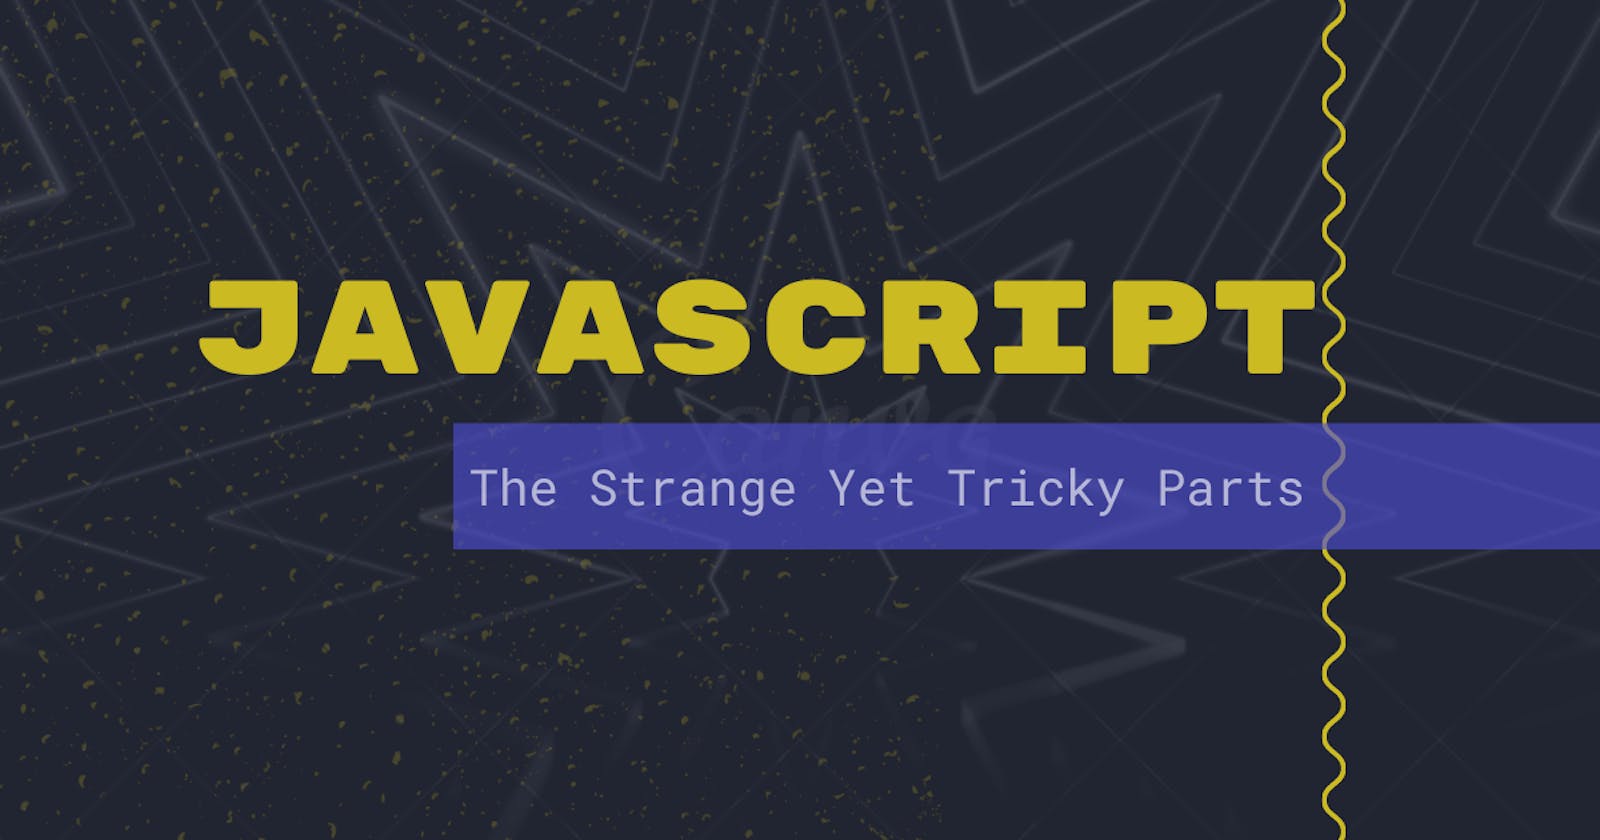 JavaScript: The Strange Yet Tricky Parts